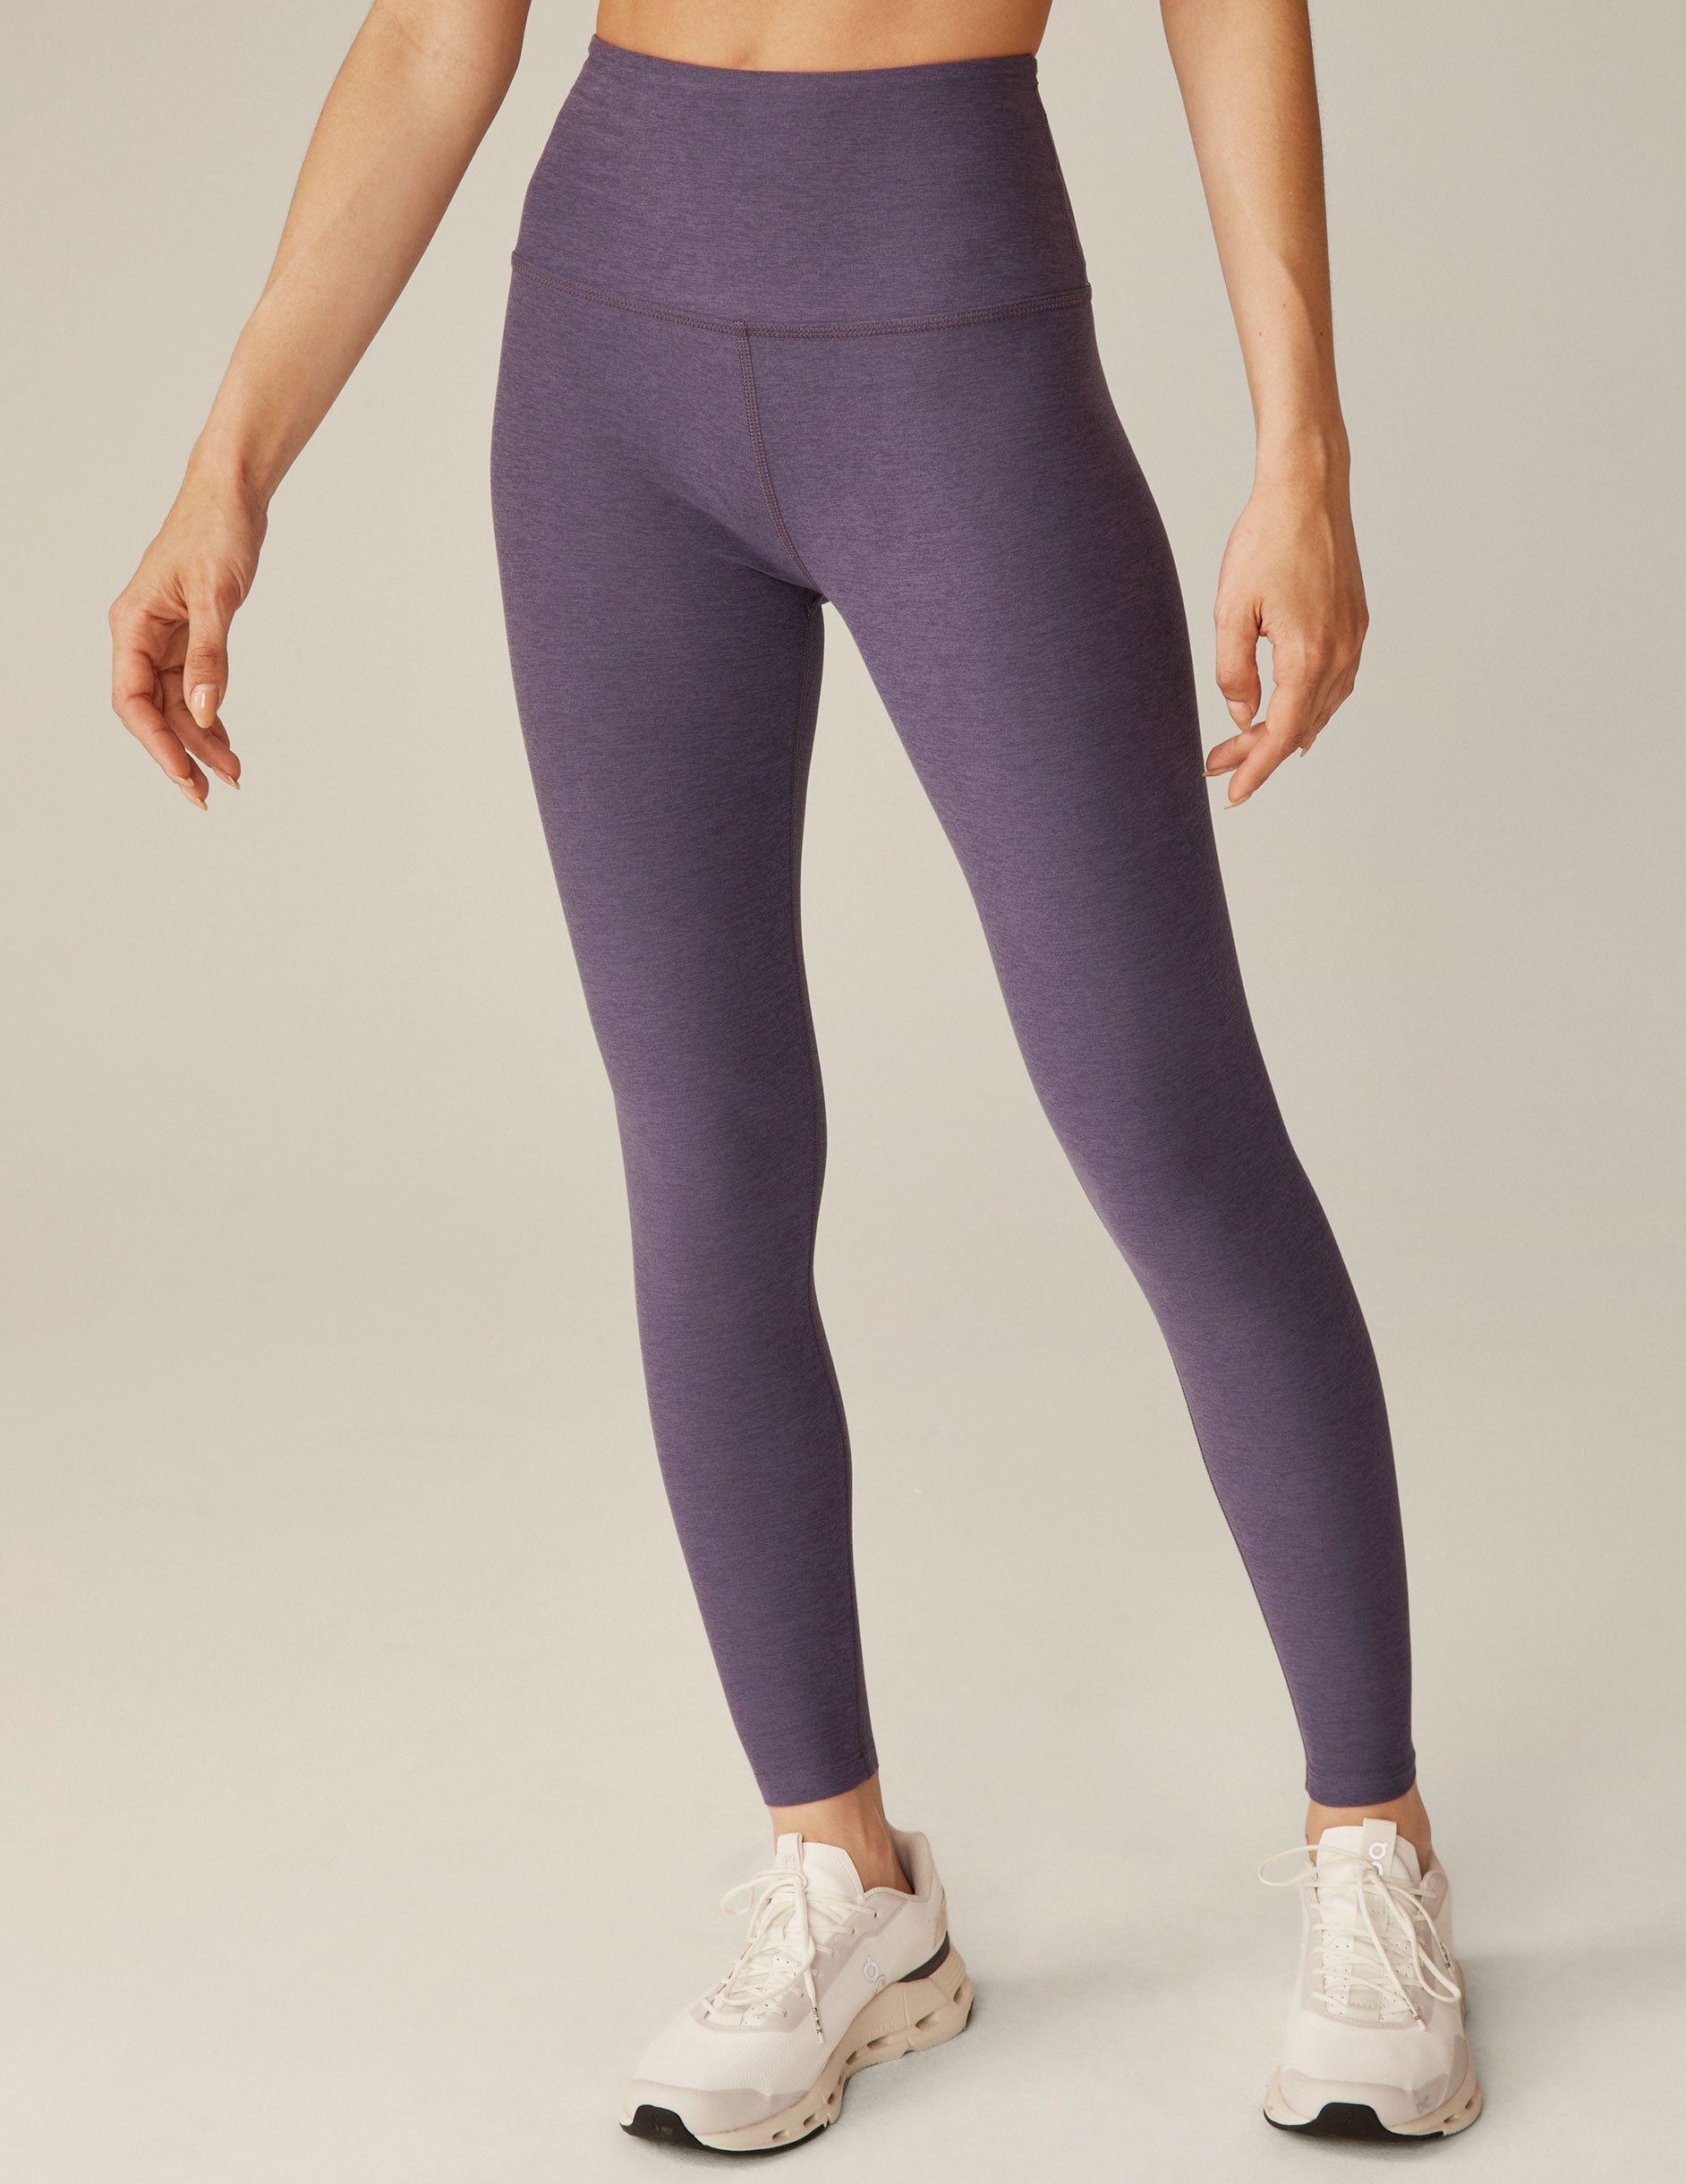 Beyond Yoga Purple Leggings Size L - 62% off